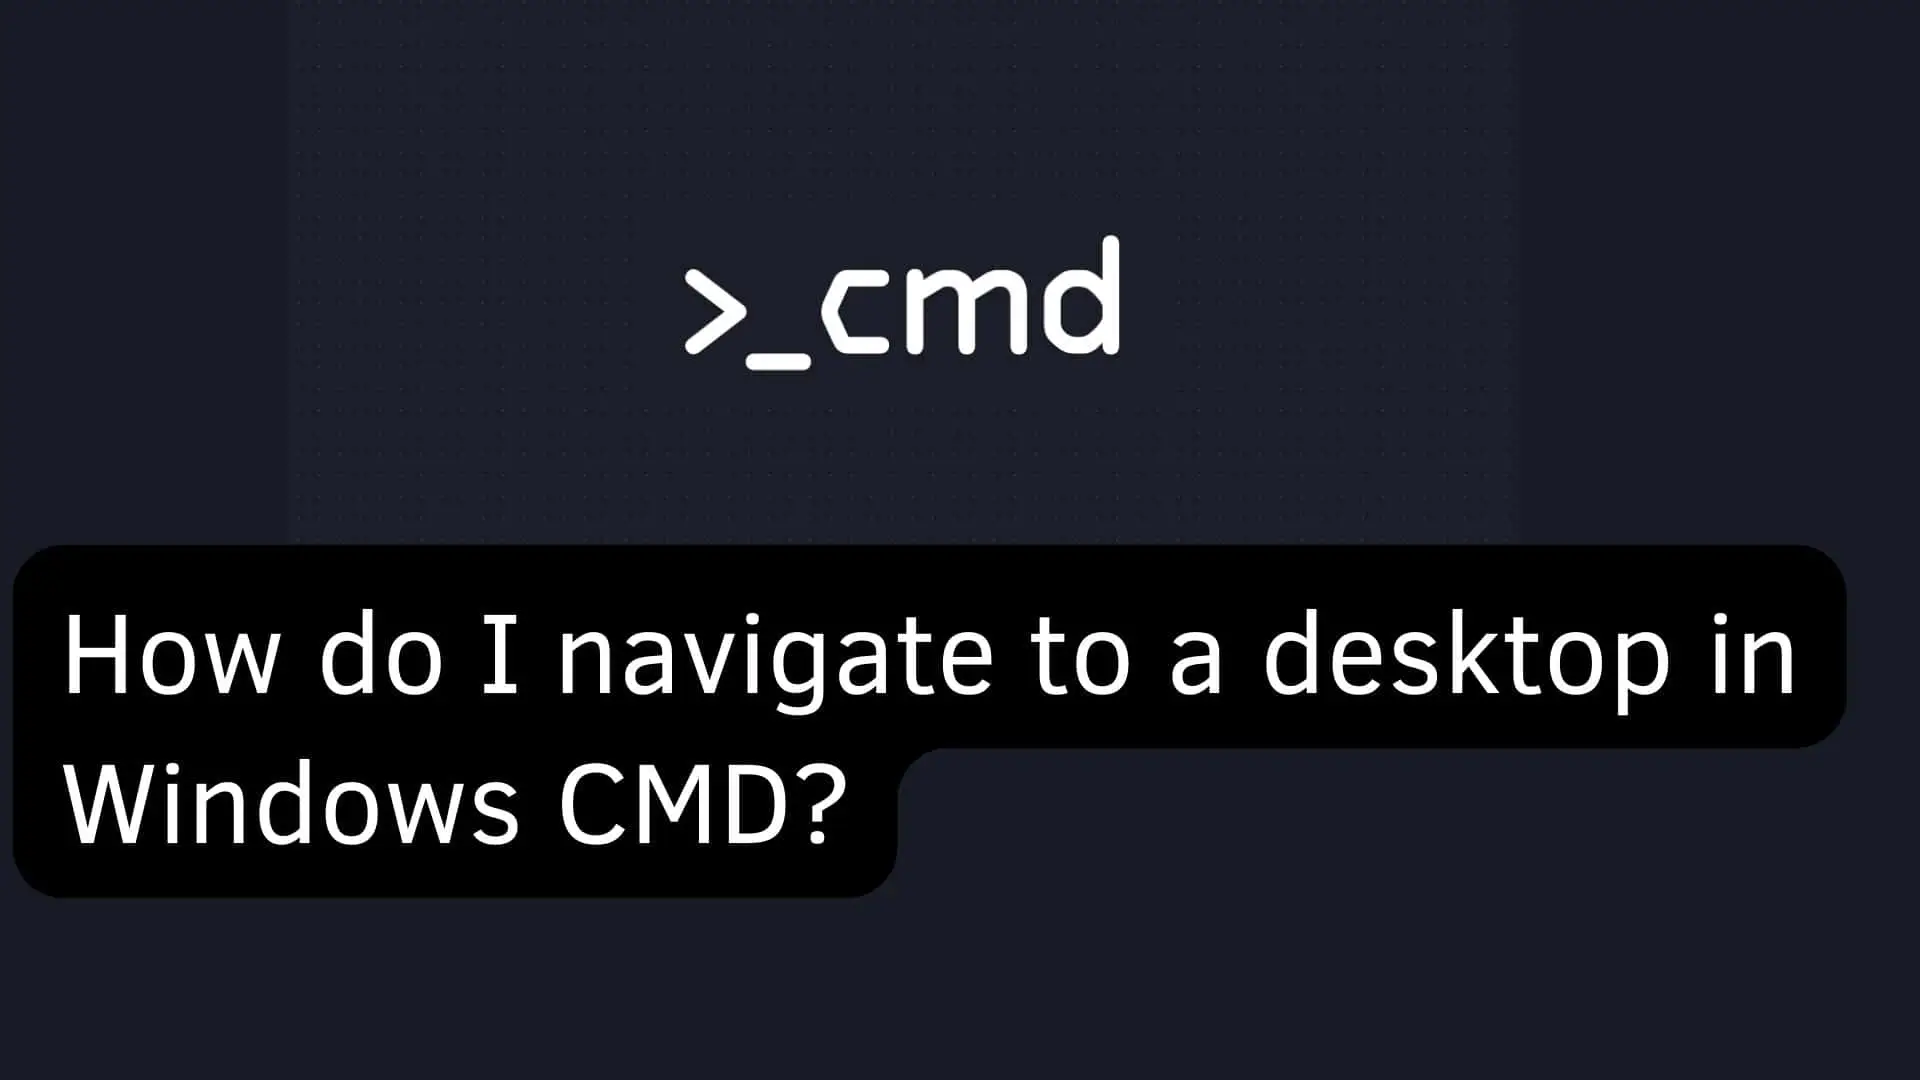 How do I navigate to a desktop in Windows CMD?